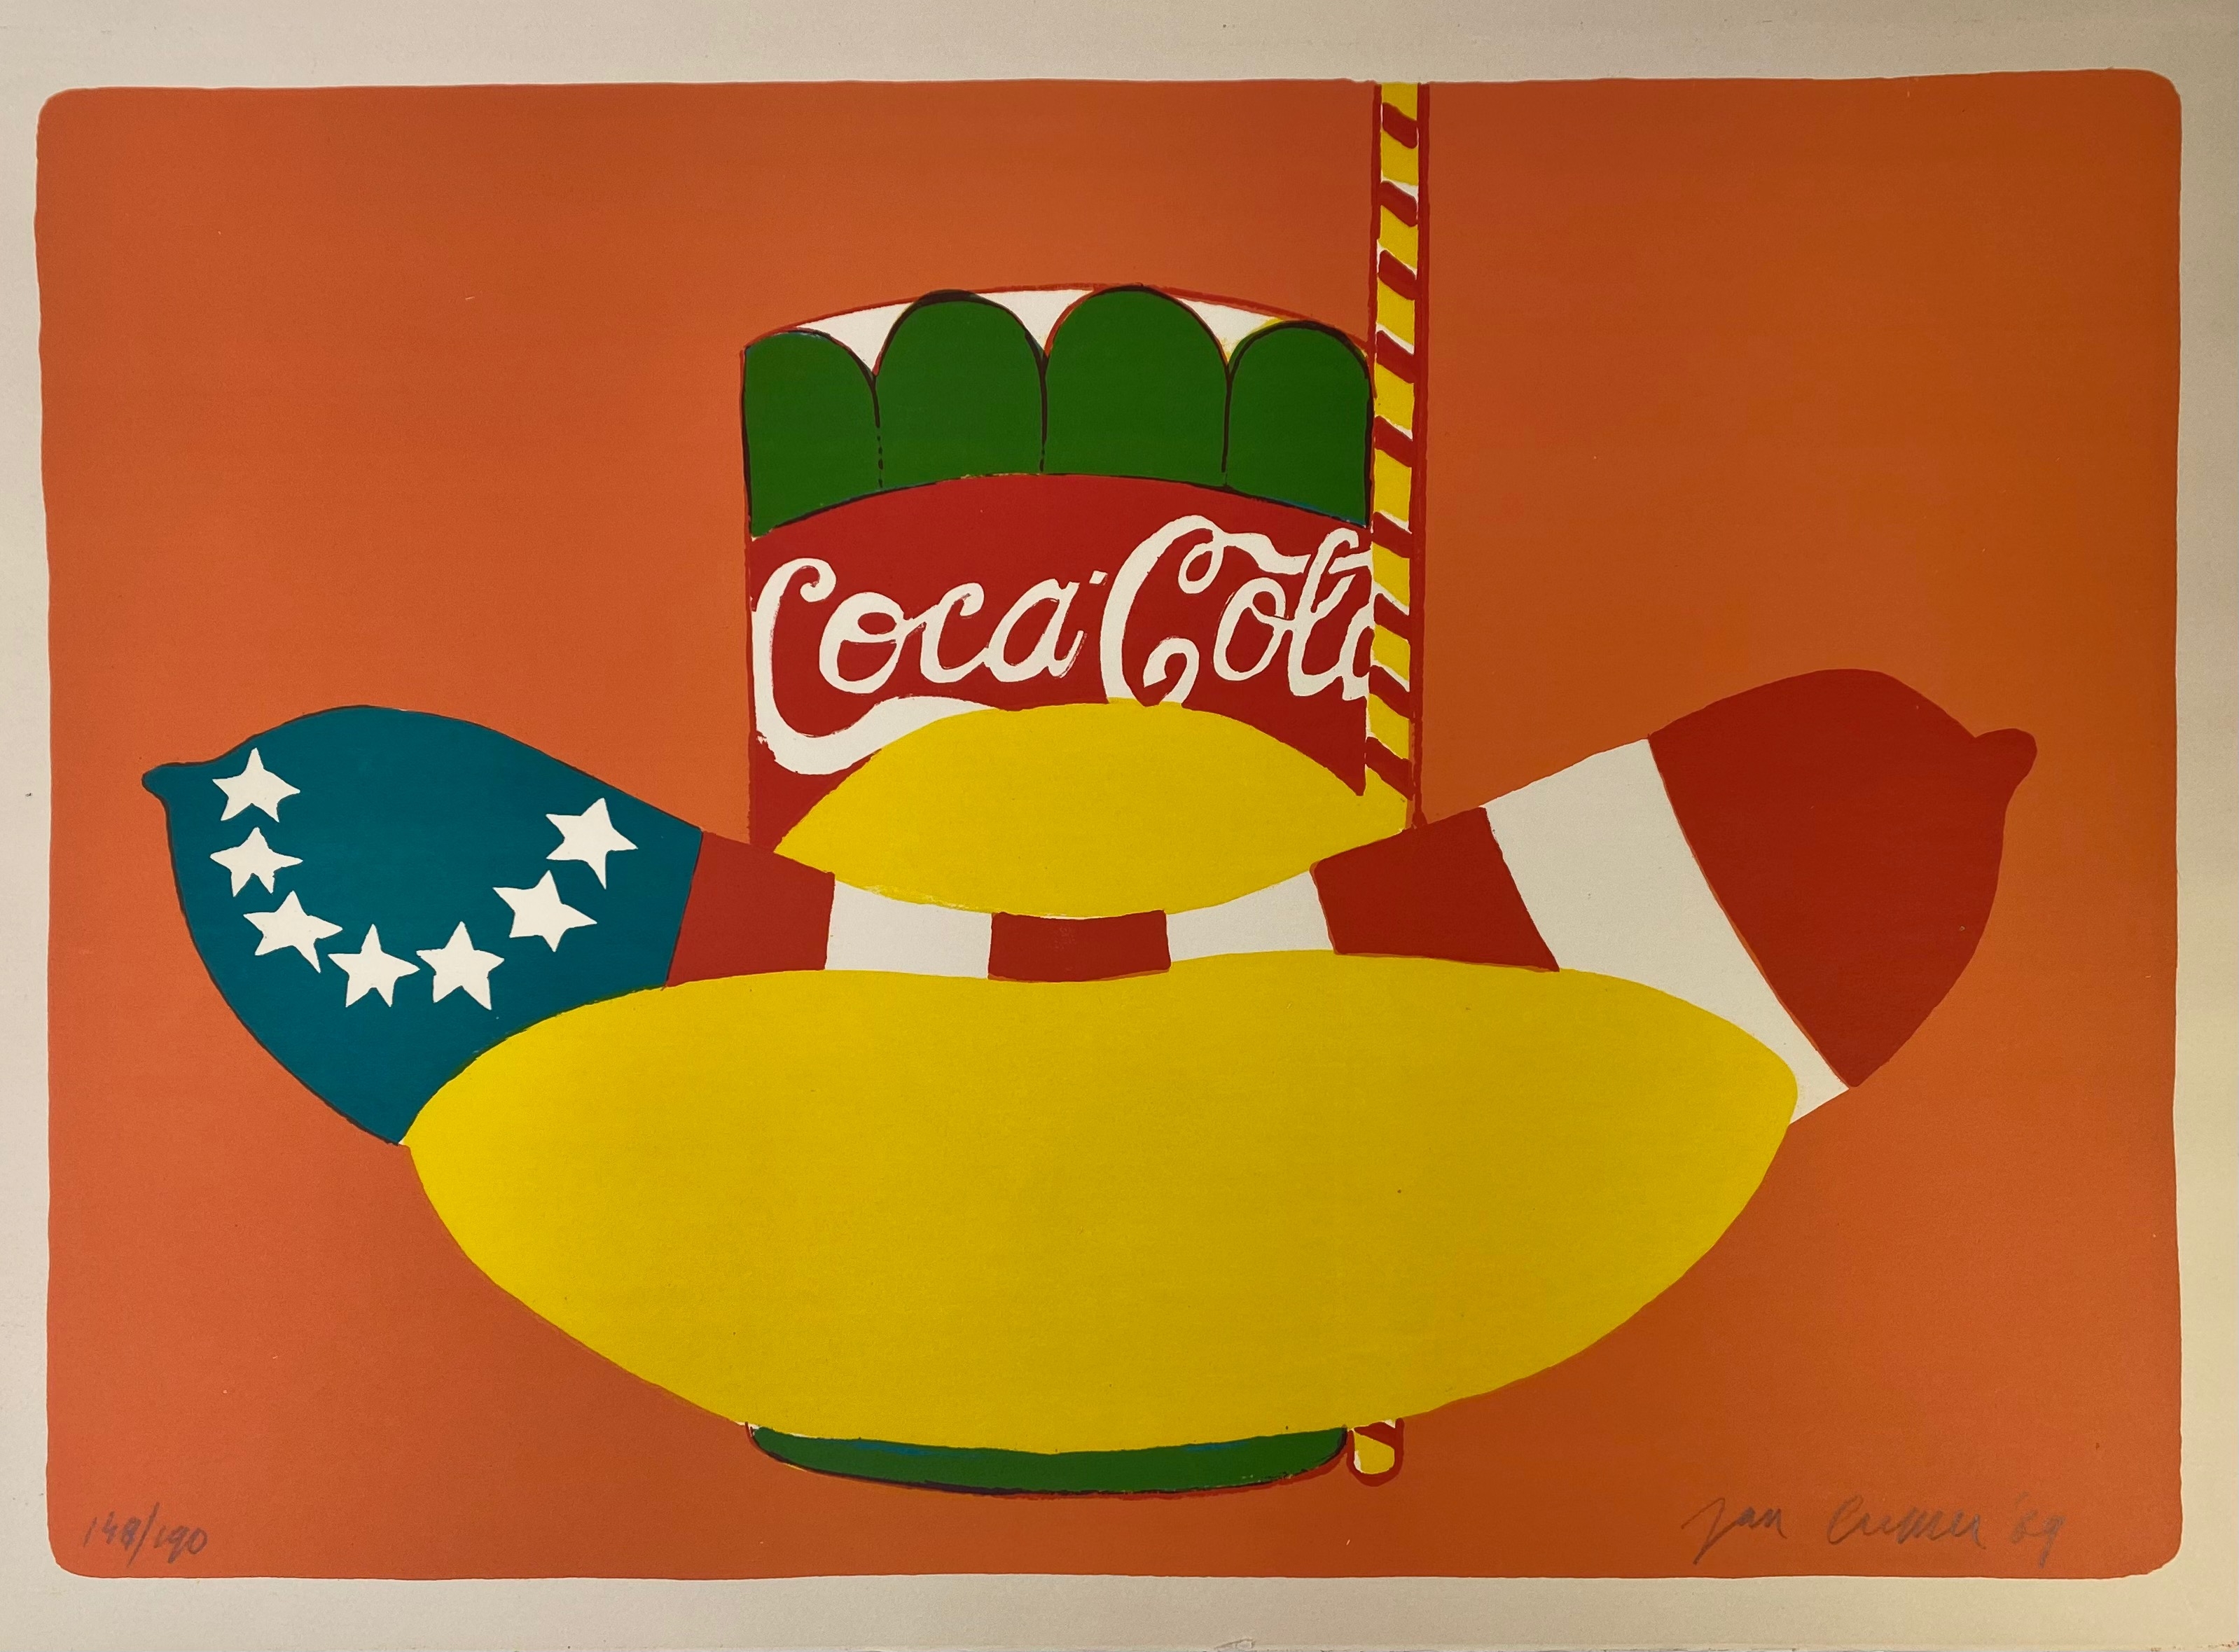 Hot Dog / Coca Cola by Jan Cremer, 1969